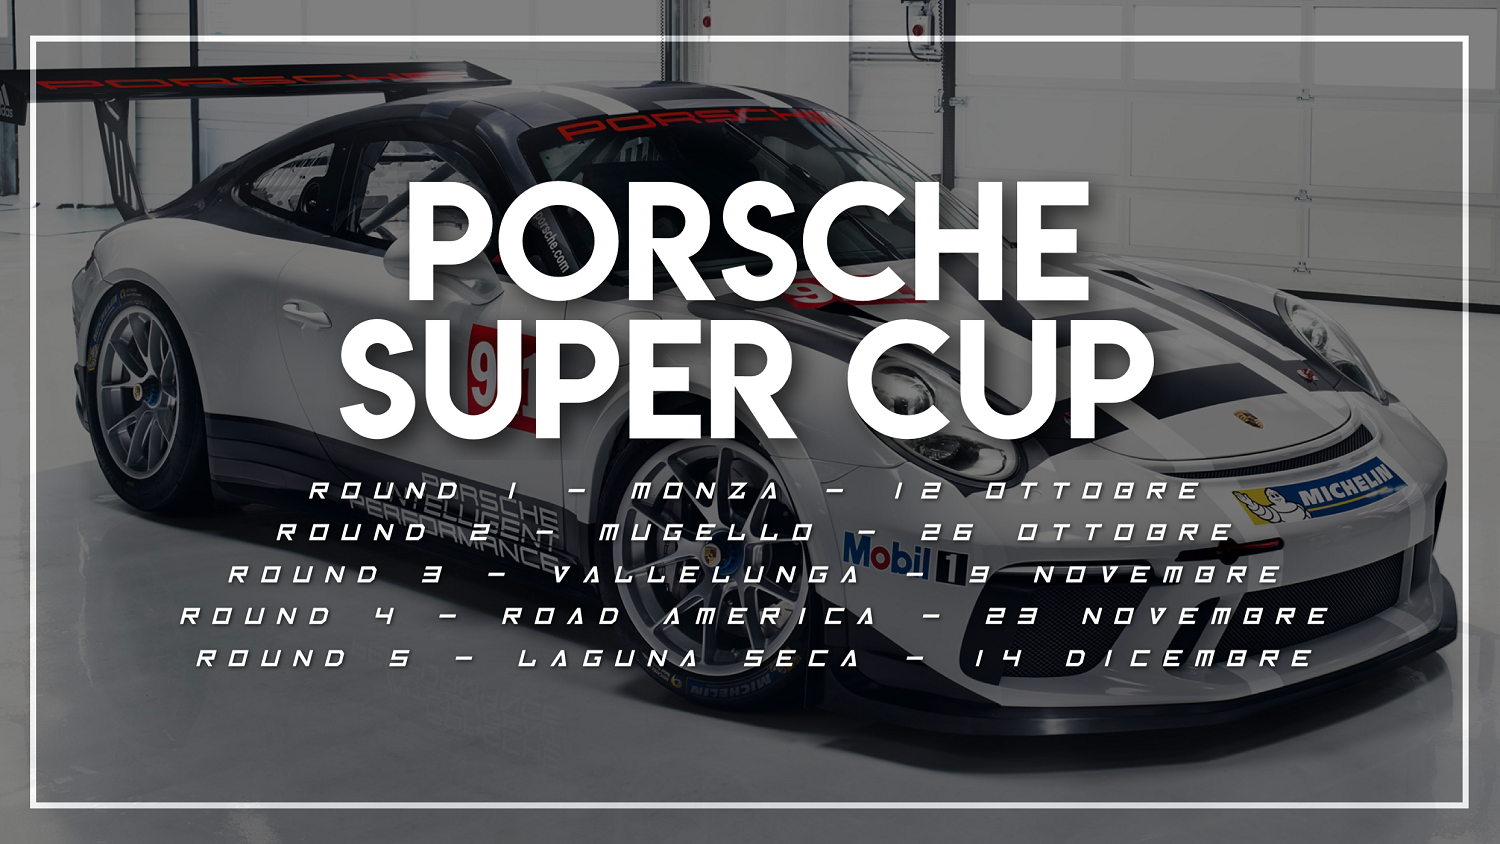 More information about "Assetto Corsa: Porsche Super Cup LIVE 12 Ottobre ore 21,30"